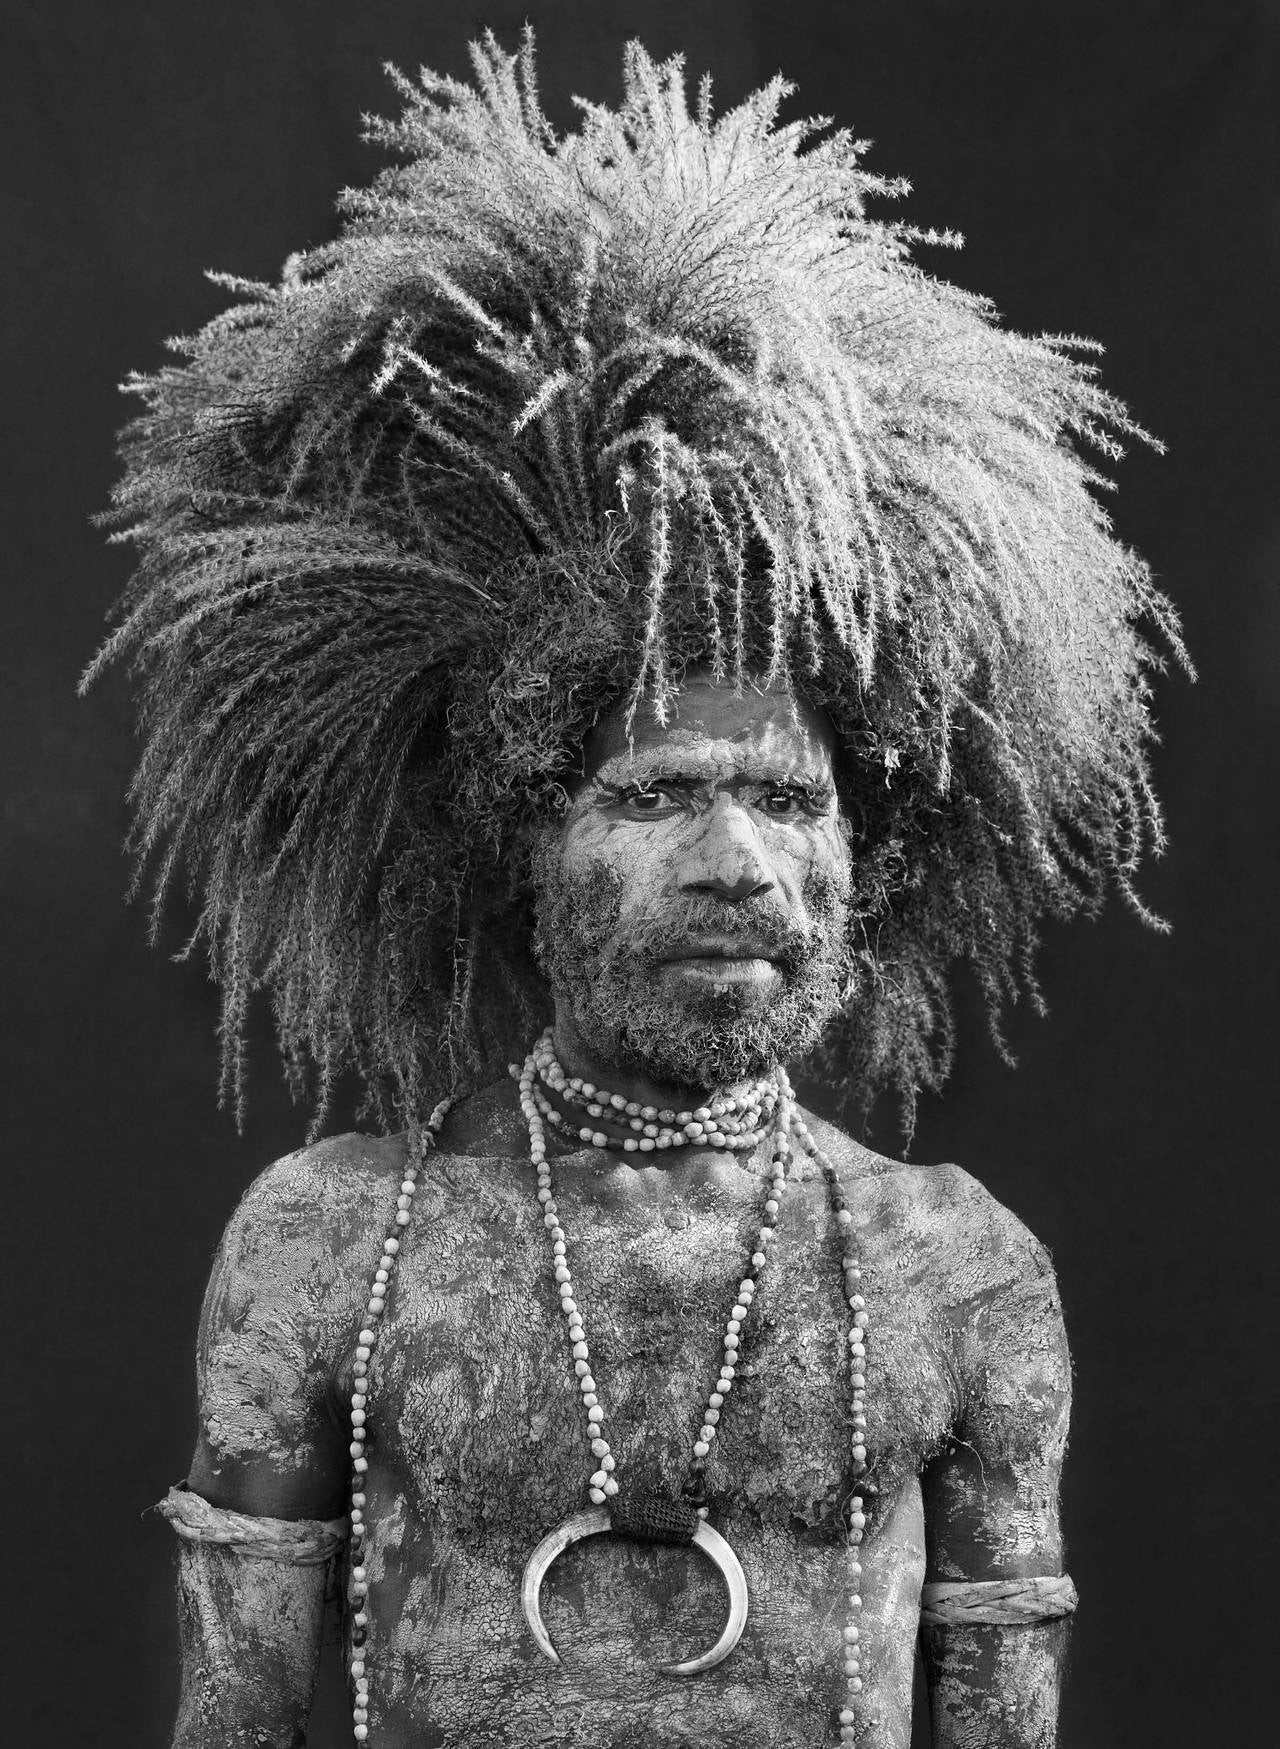 Участник фестиваля, Маунт-Хаген, Папуа-Новая Гвинея, 2008. Автор Себастьян Сальгадо